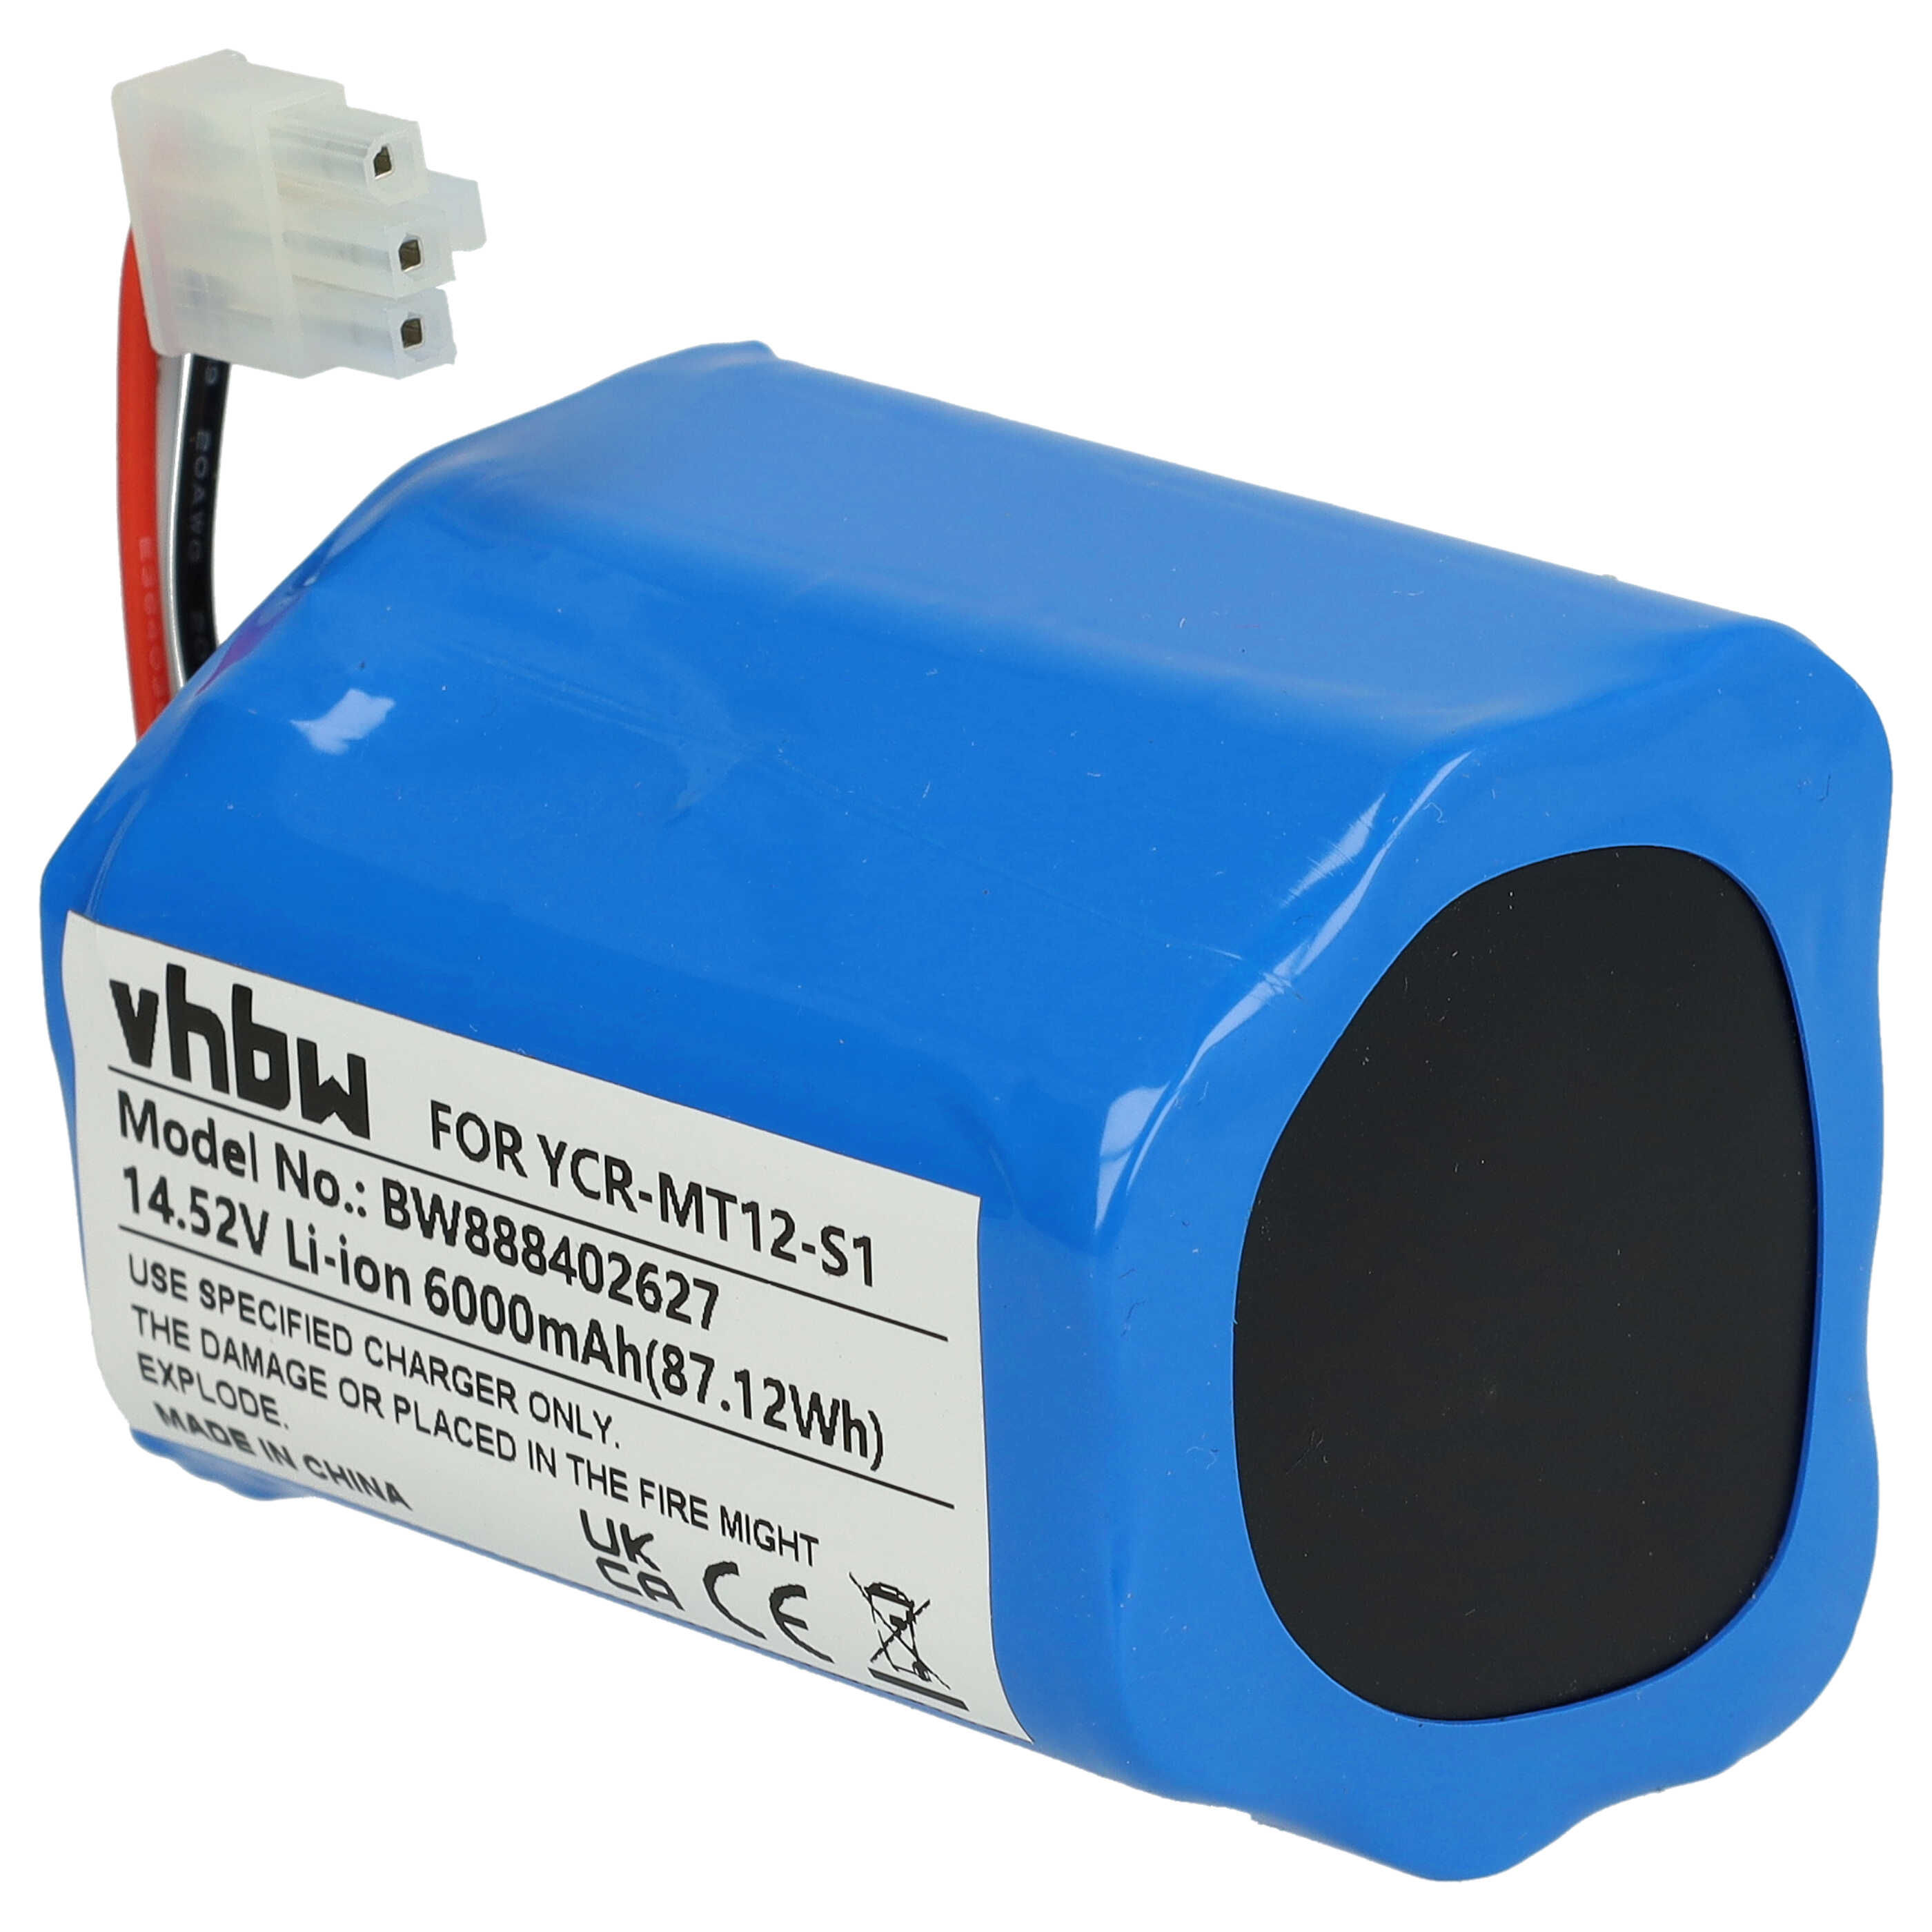 Batterie remplace iClebo YCR-M07-20W, YCR-MT12-S1 pour robot aspirateur - 6000mAh 14,52V Li-ion